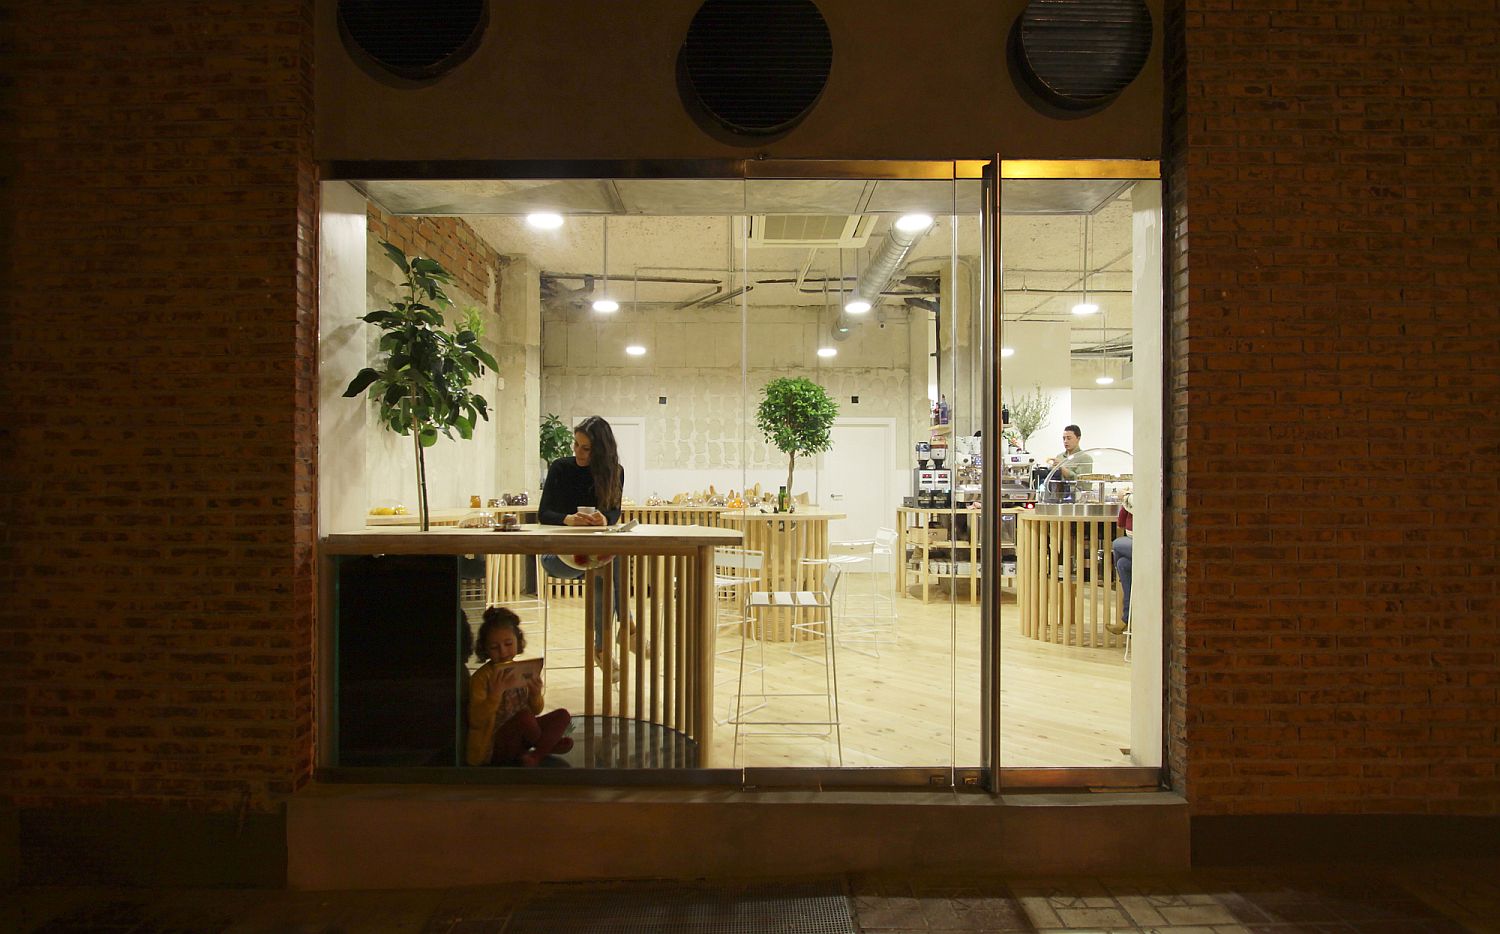 Reclaiming Greenery in the Urban Landscape: Innovative Spanish Restaurant